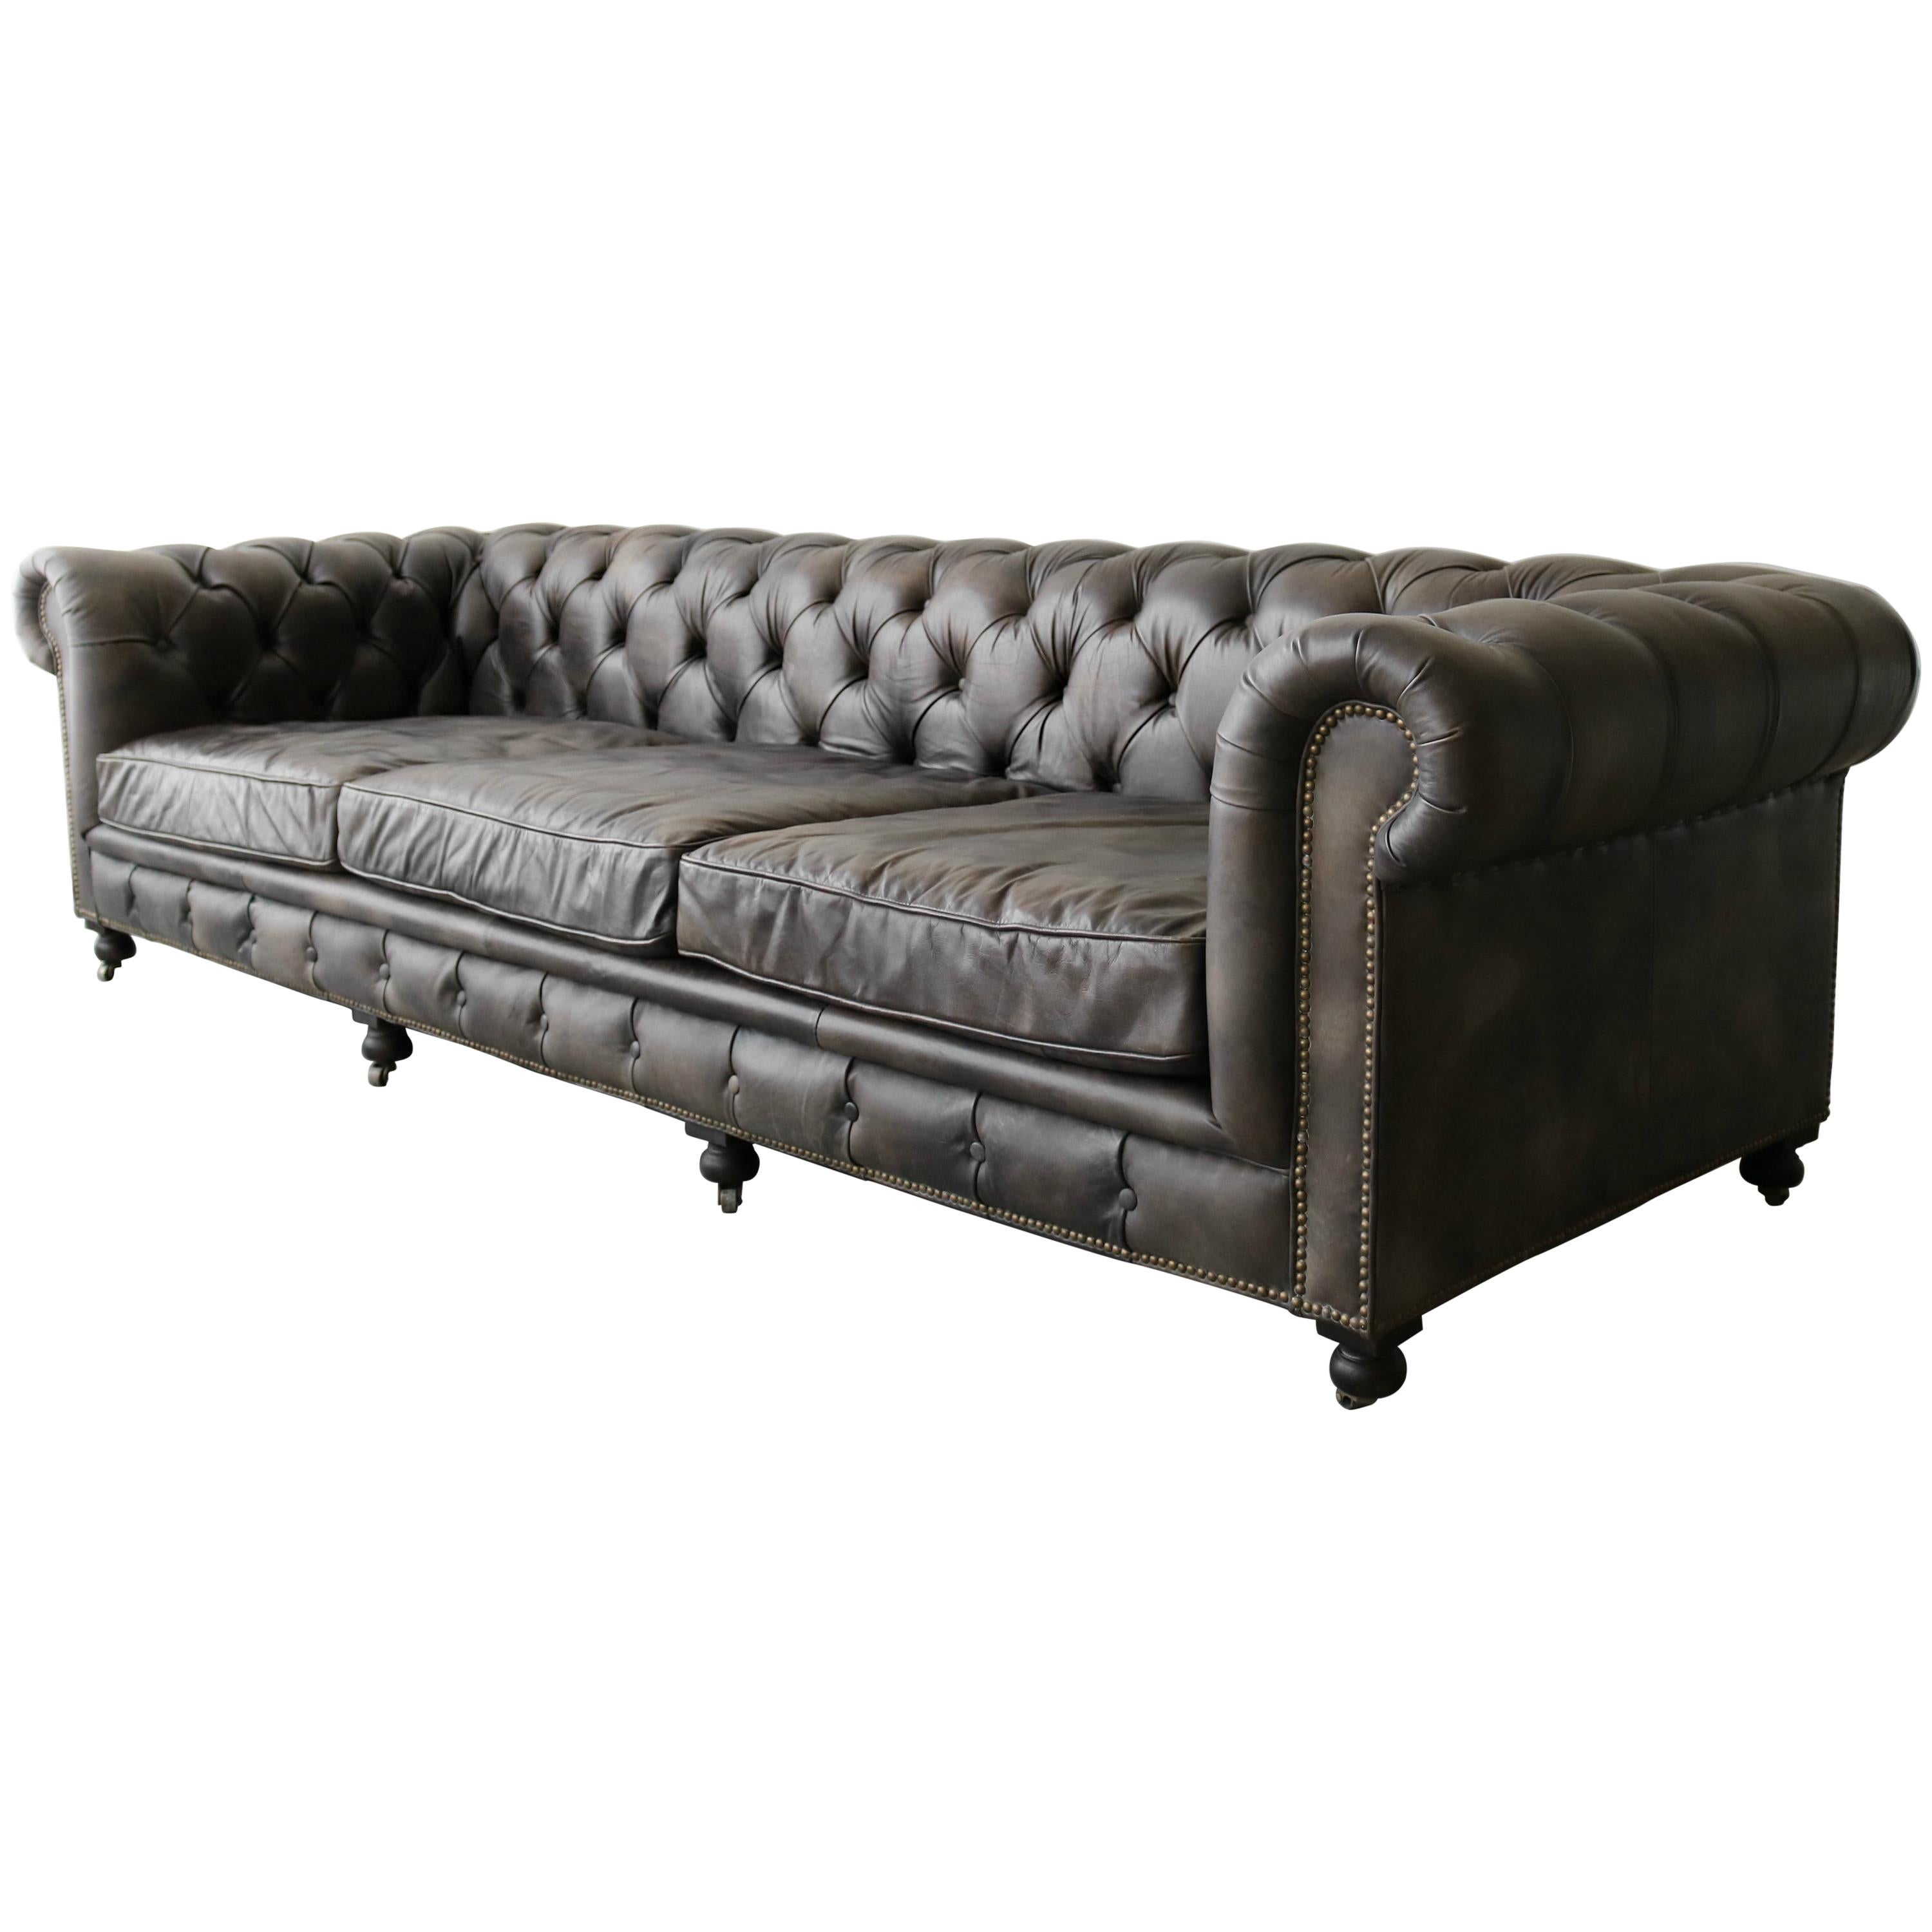 Italian Leather Chesterfield Sofa